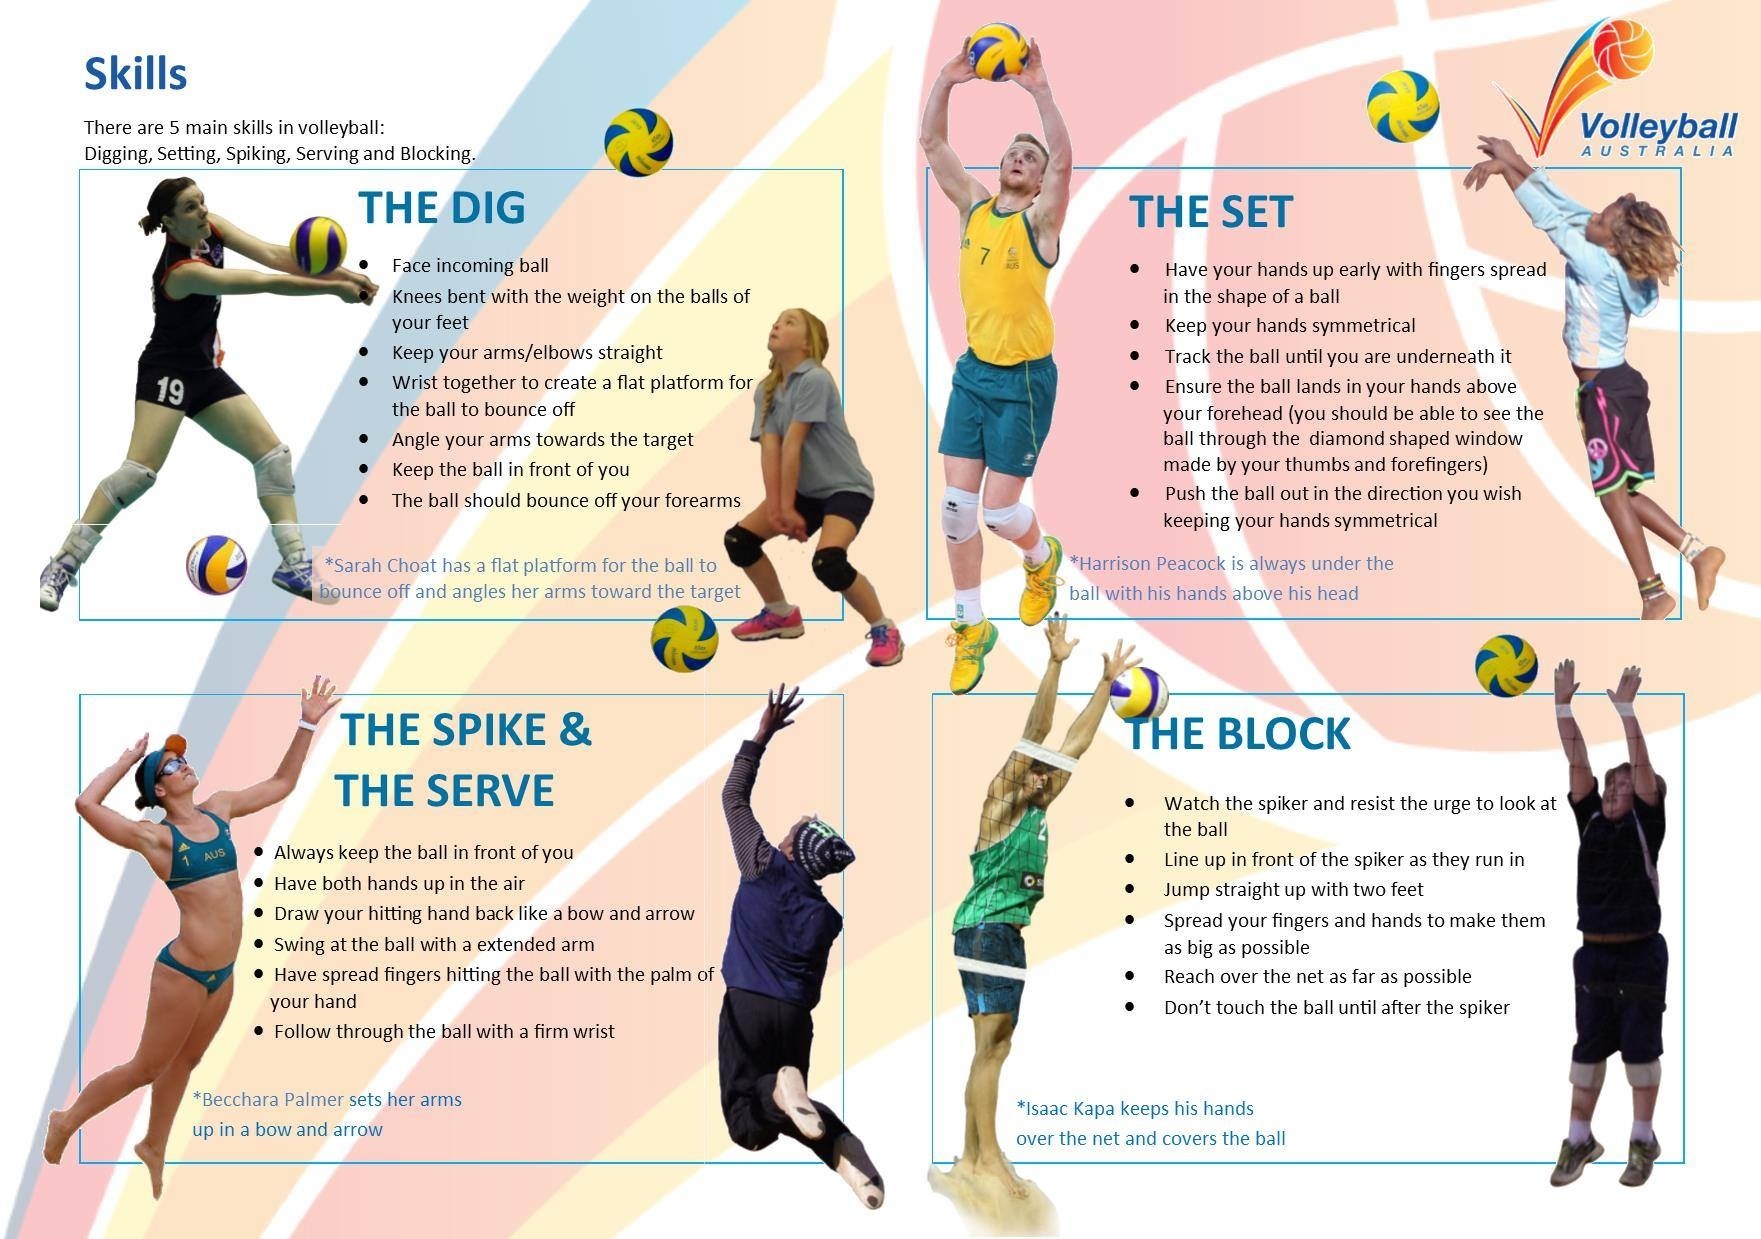 Volleyball Skills Model Provided By Volleyball Australia Sydney